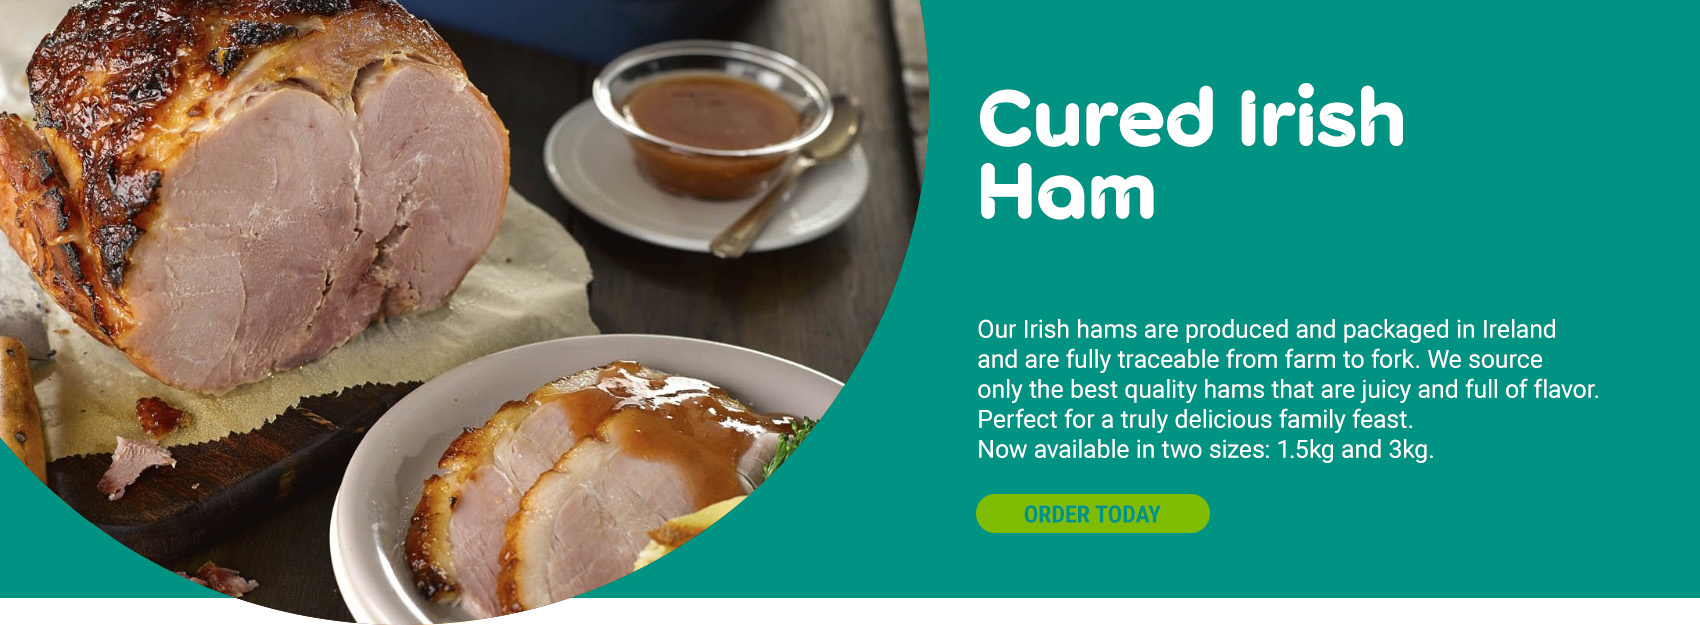 Cured Irish Ham